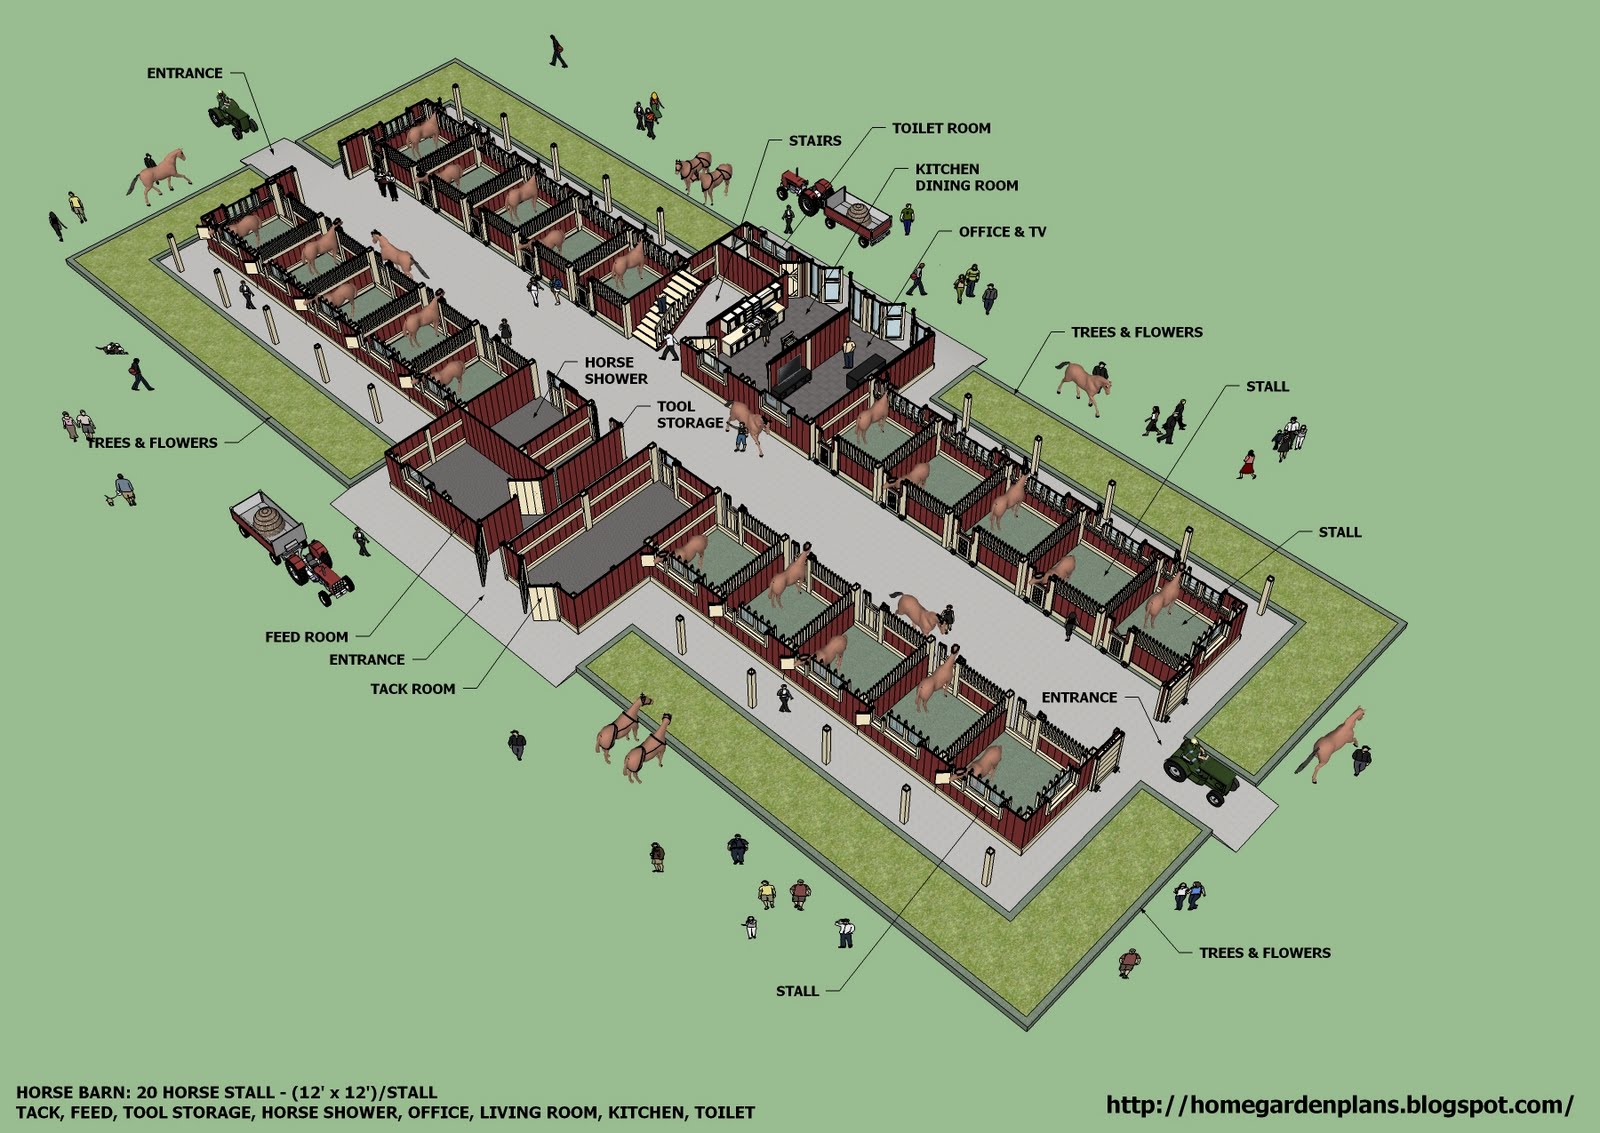 B20H - Large Horse Barn for 20 Horse Stall - 20 Stall Horse Barn Plans ...